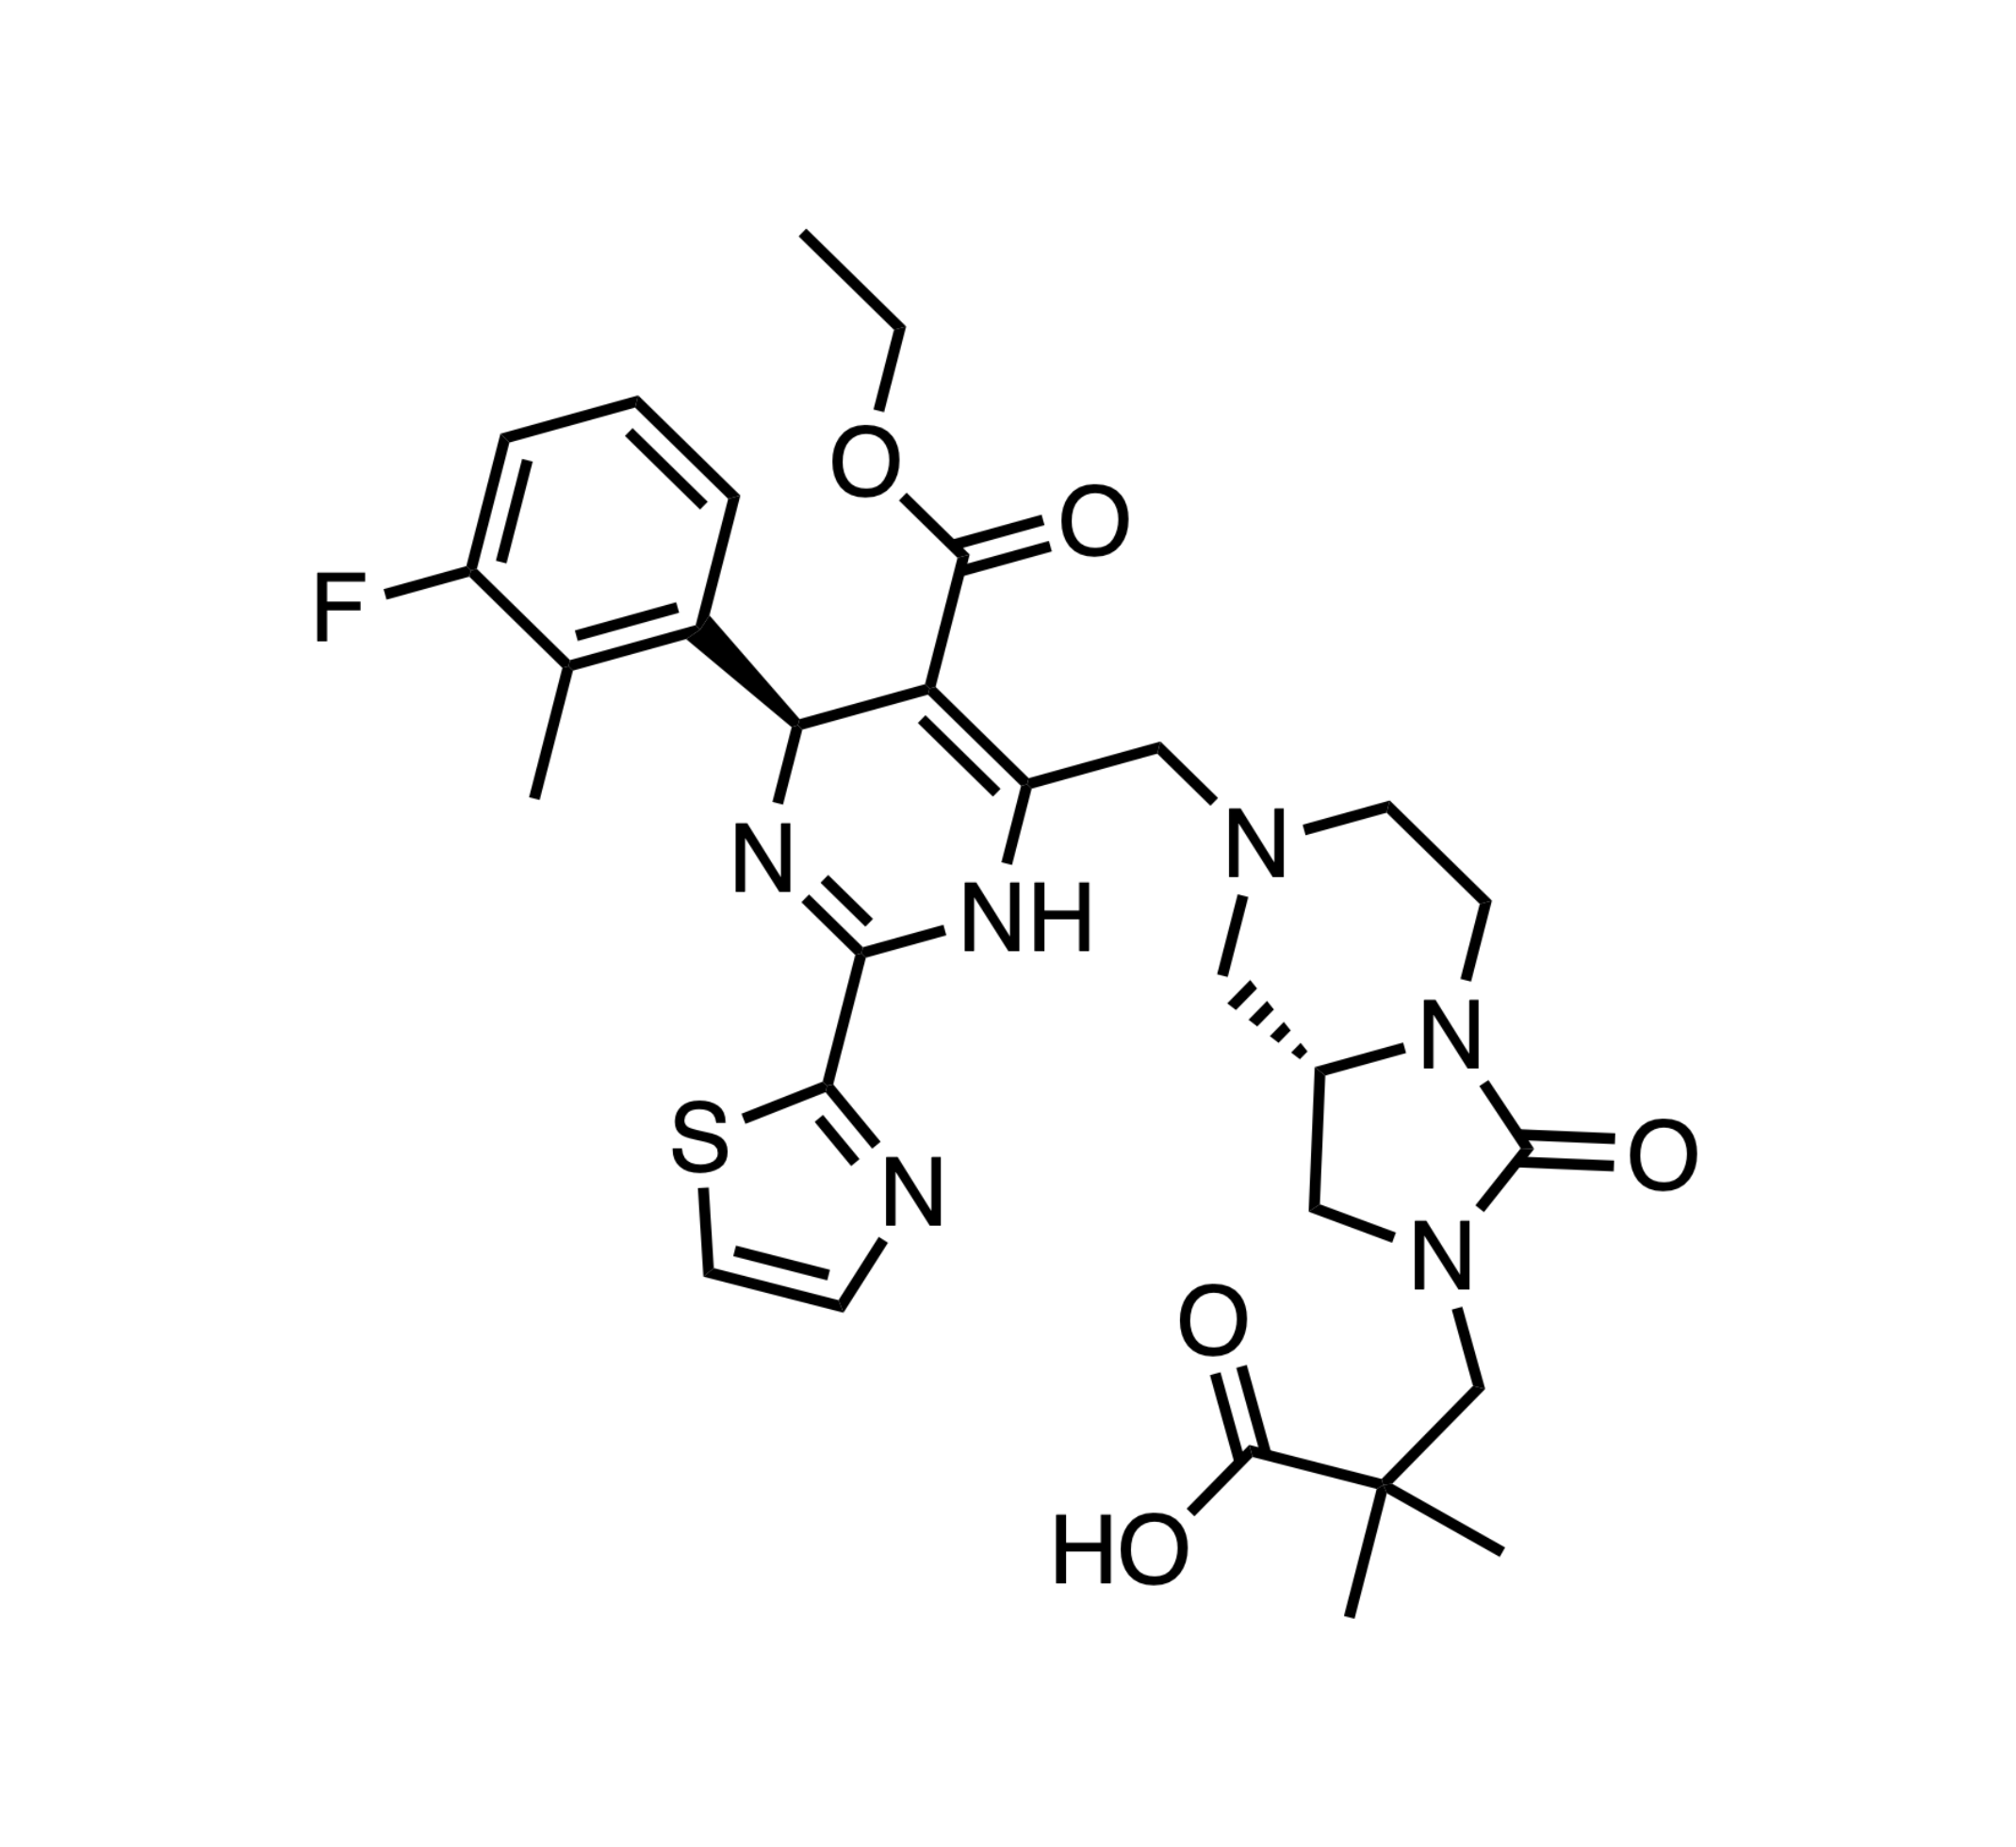 linvencorvir, allosteric HBV modulator, Ph. II for chronic hepatitis B (CHB), opt. of known allosteric heteroaryl pyrimidine core protein modulator, J. Med. Chem., March 10, 2023, ROCHE, SHANGHAI, CN